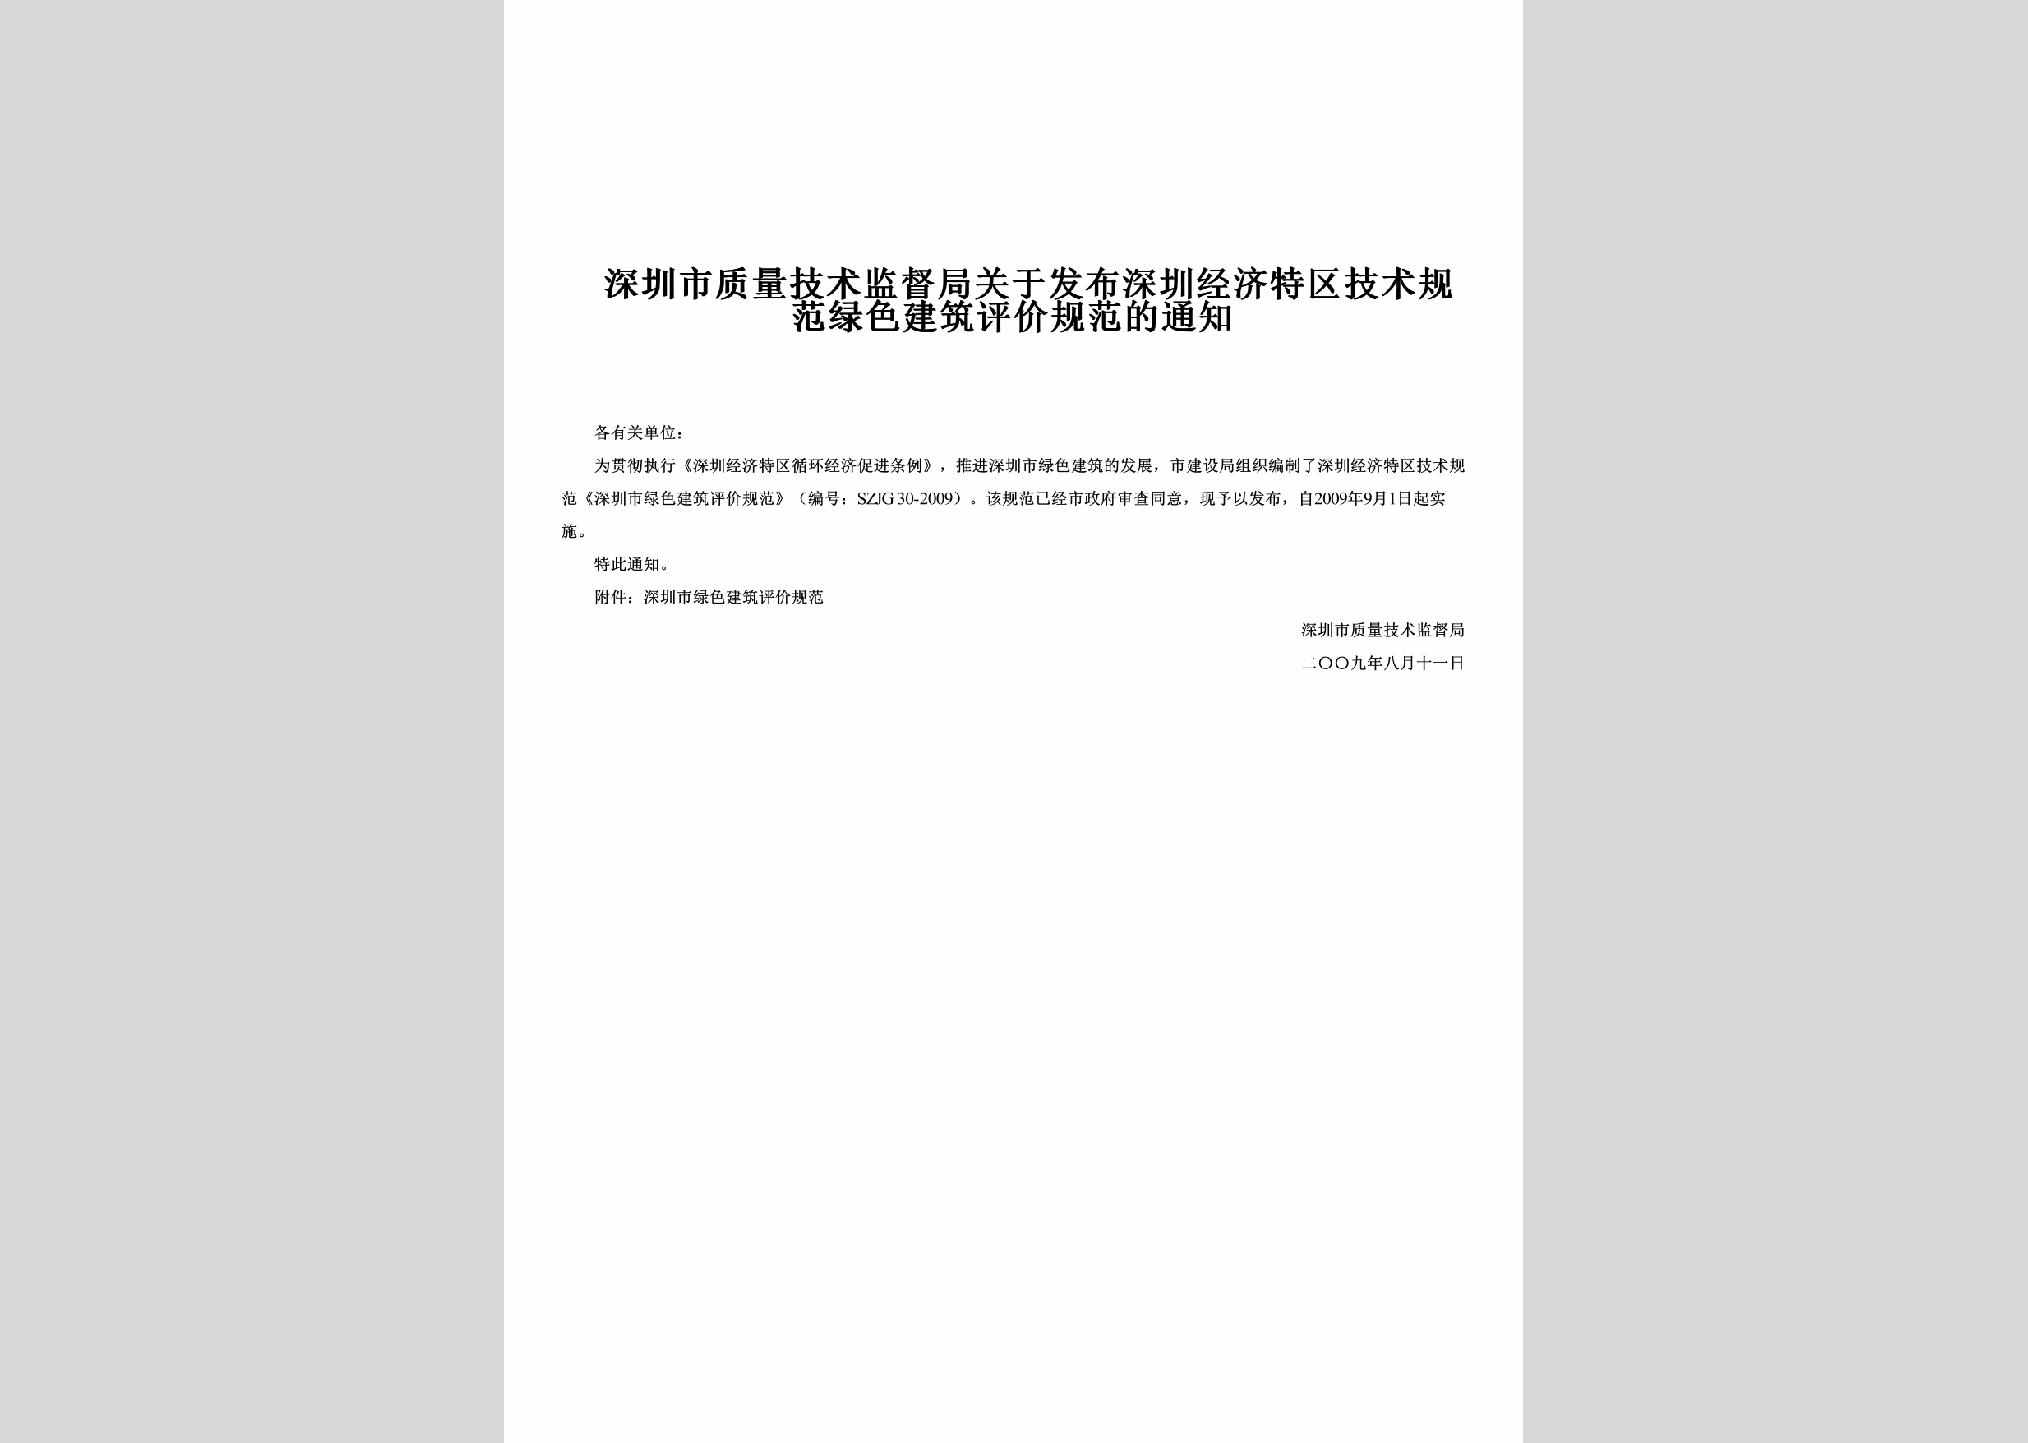 GD-JJTQJSGF-2009：关于发布深圳经济特区技术规范绿色建筑评价规范的通知